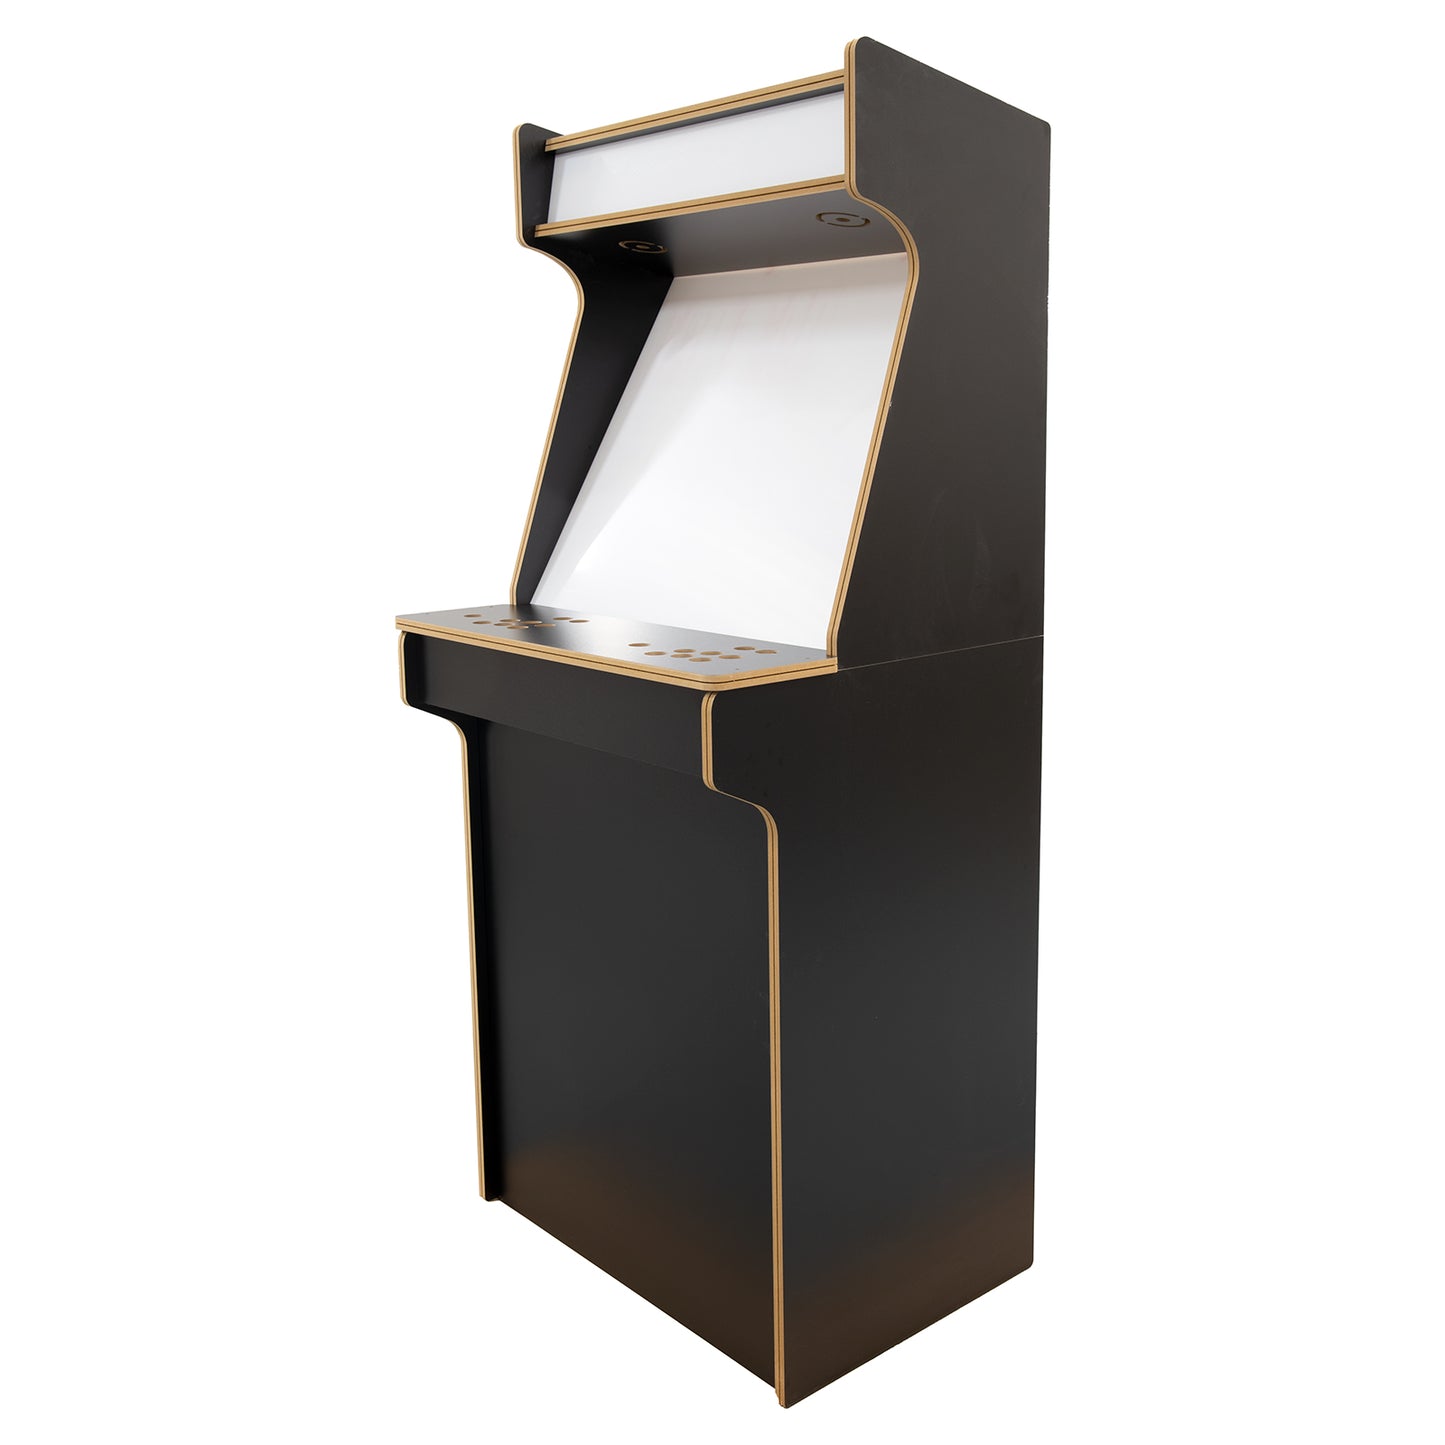 2 Player 27" Upright Arcade Cabinet Flat Pack Kit - Black